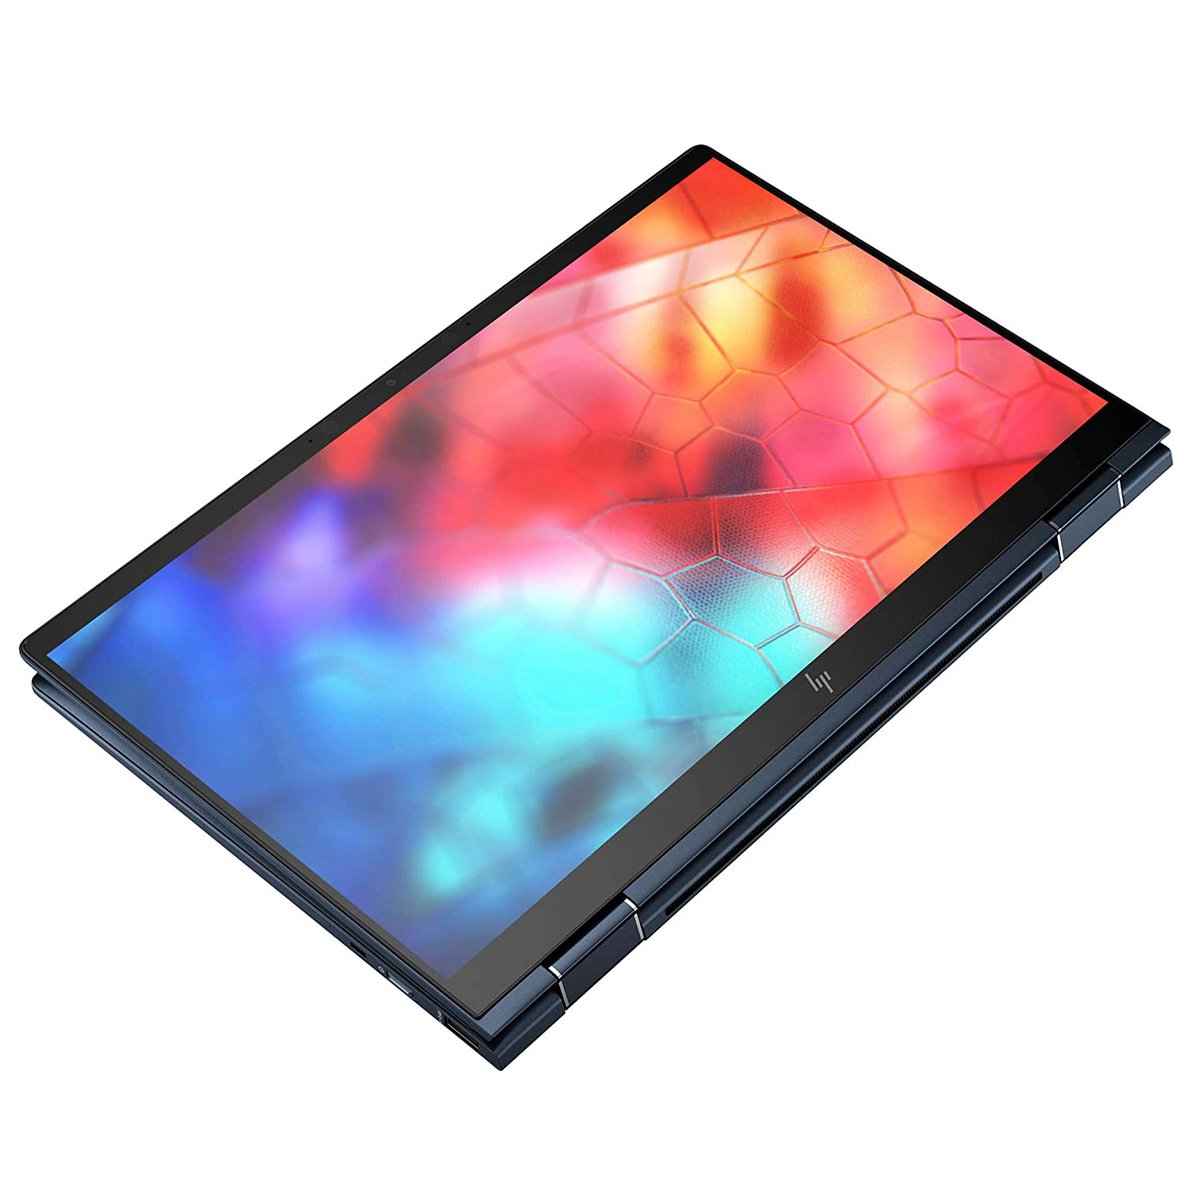 HP Elite Dragonfly x360 Home and Business Laptop (Intel i7-8565U 4-Core, 16GB RAM, 512GB SSD, Intel UHD 620, 13.3" Touch Full HD,Black